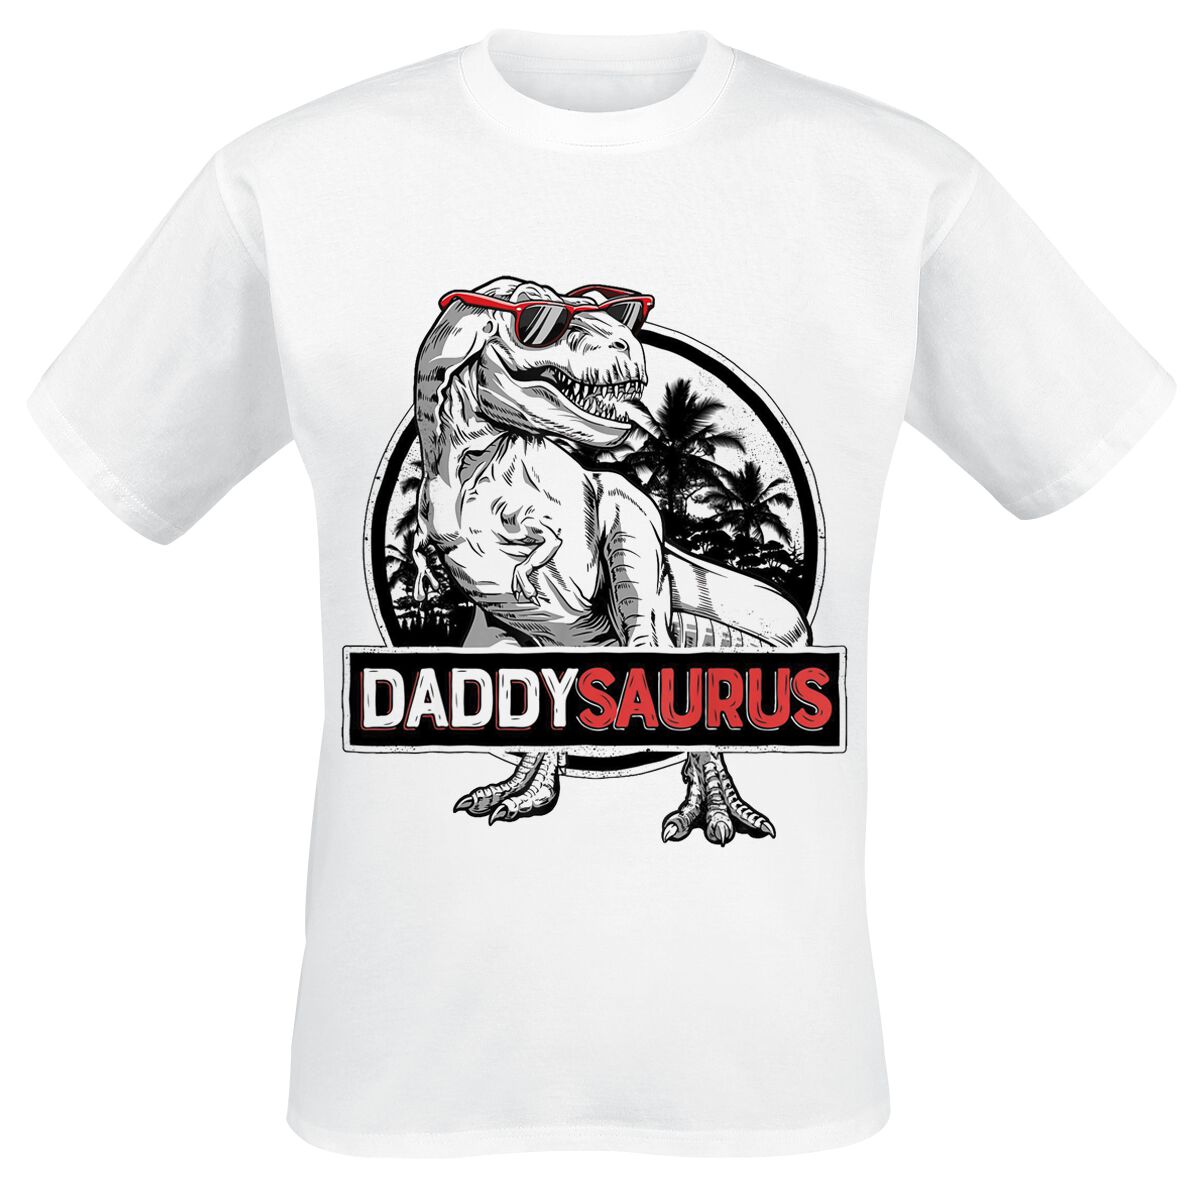 Family & Friends Daddysaurus 2 T-Shirt white